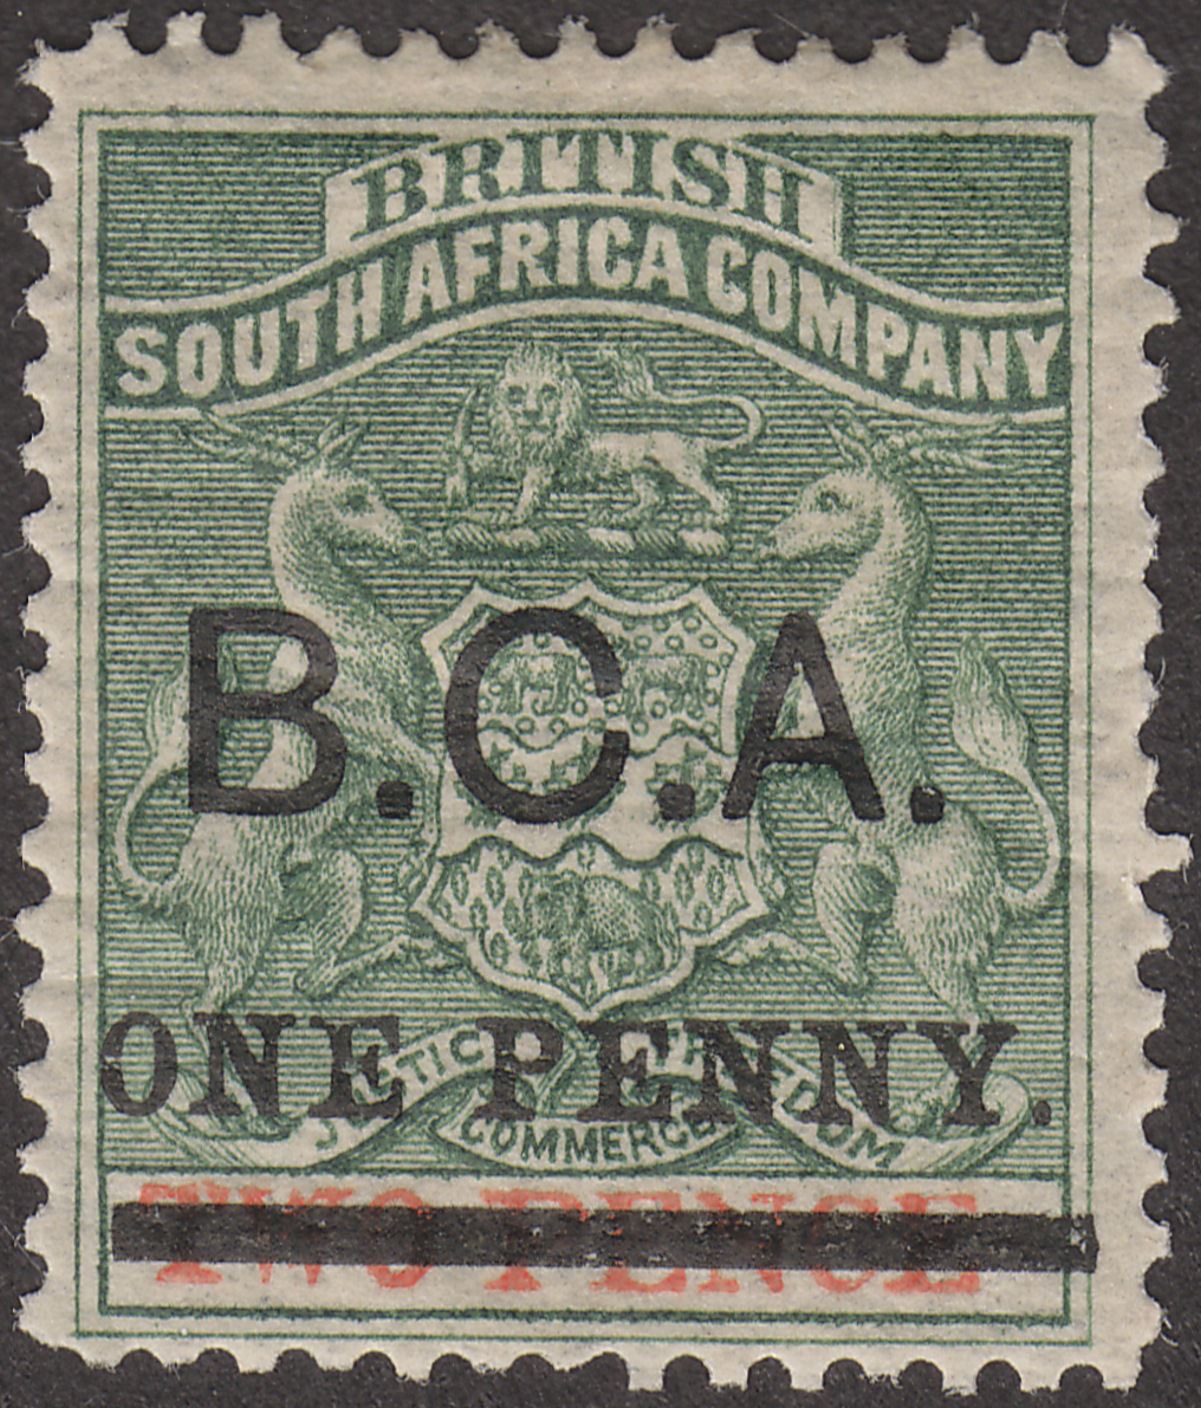 British Central Africa 1895 QV BCA Overprint BSAC 1d on 2d Mint SG20 cat £45